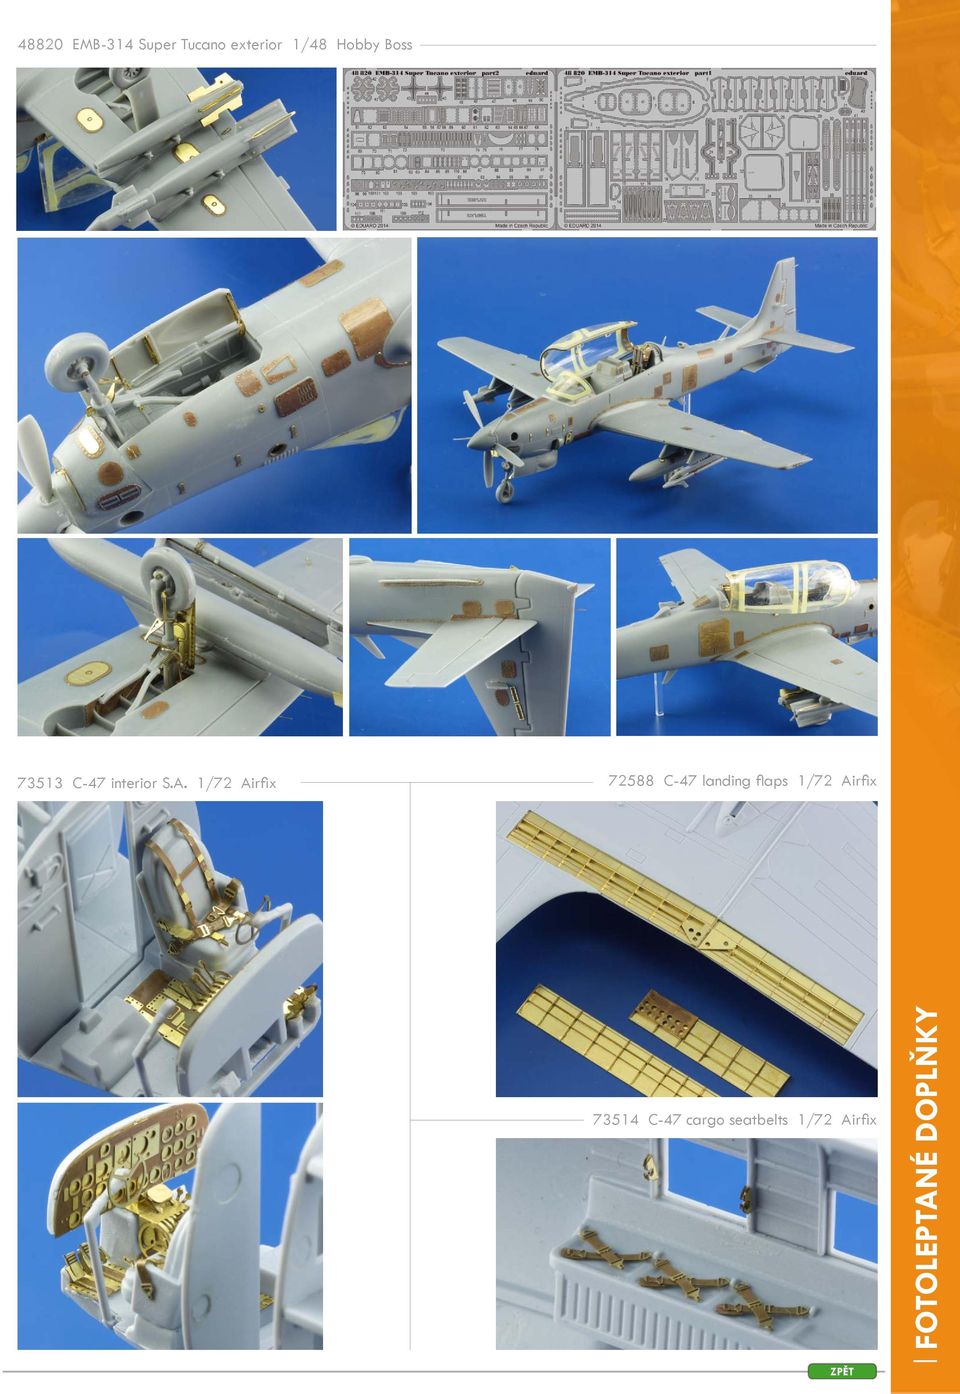 1/72 Airfix 72588 C-47 landing flaps 1/72